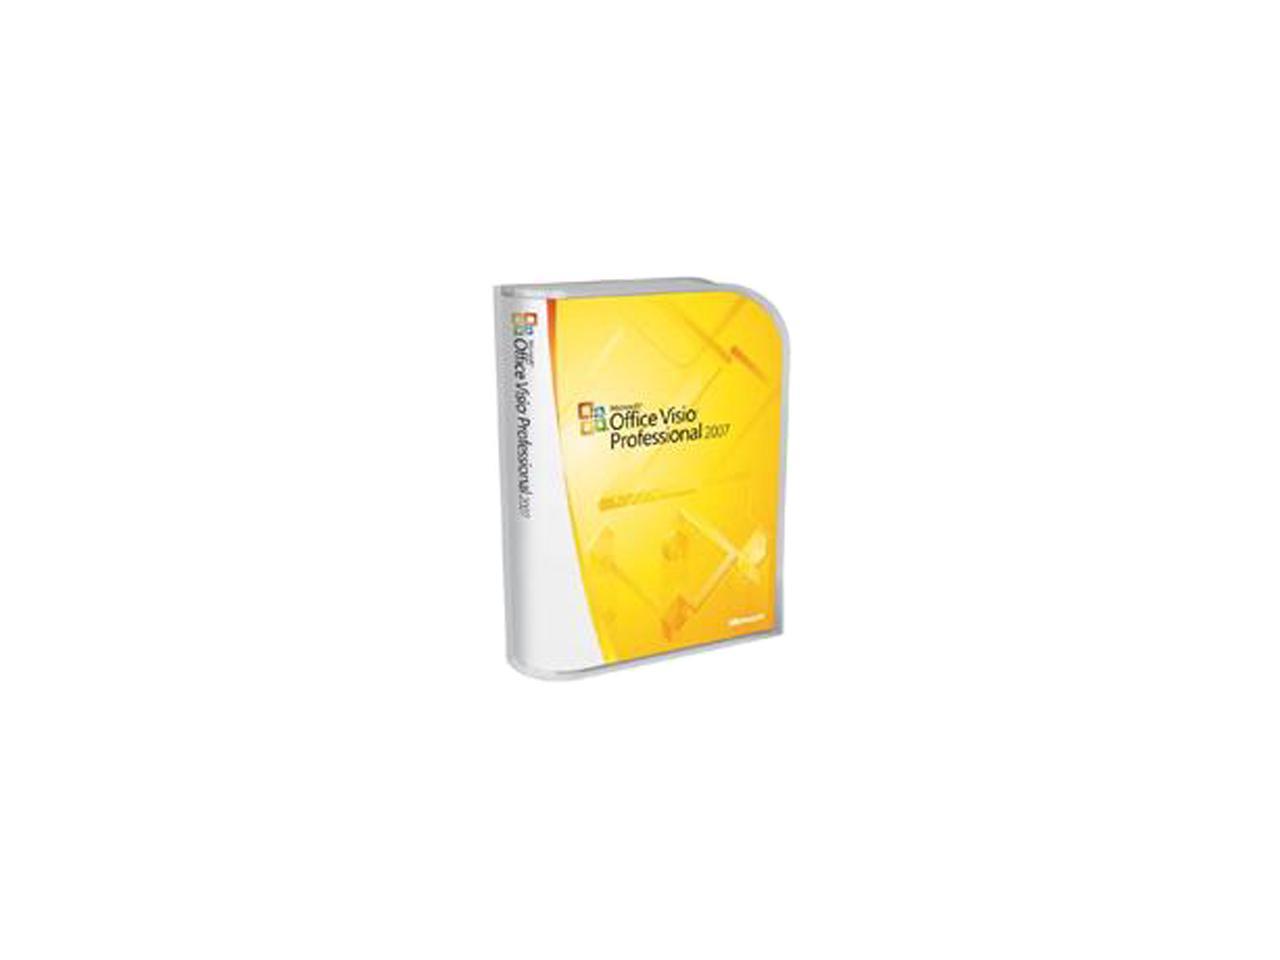 Microsoft Office Visio Professional 2007 - Newegg.com